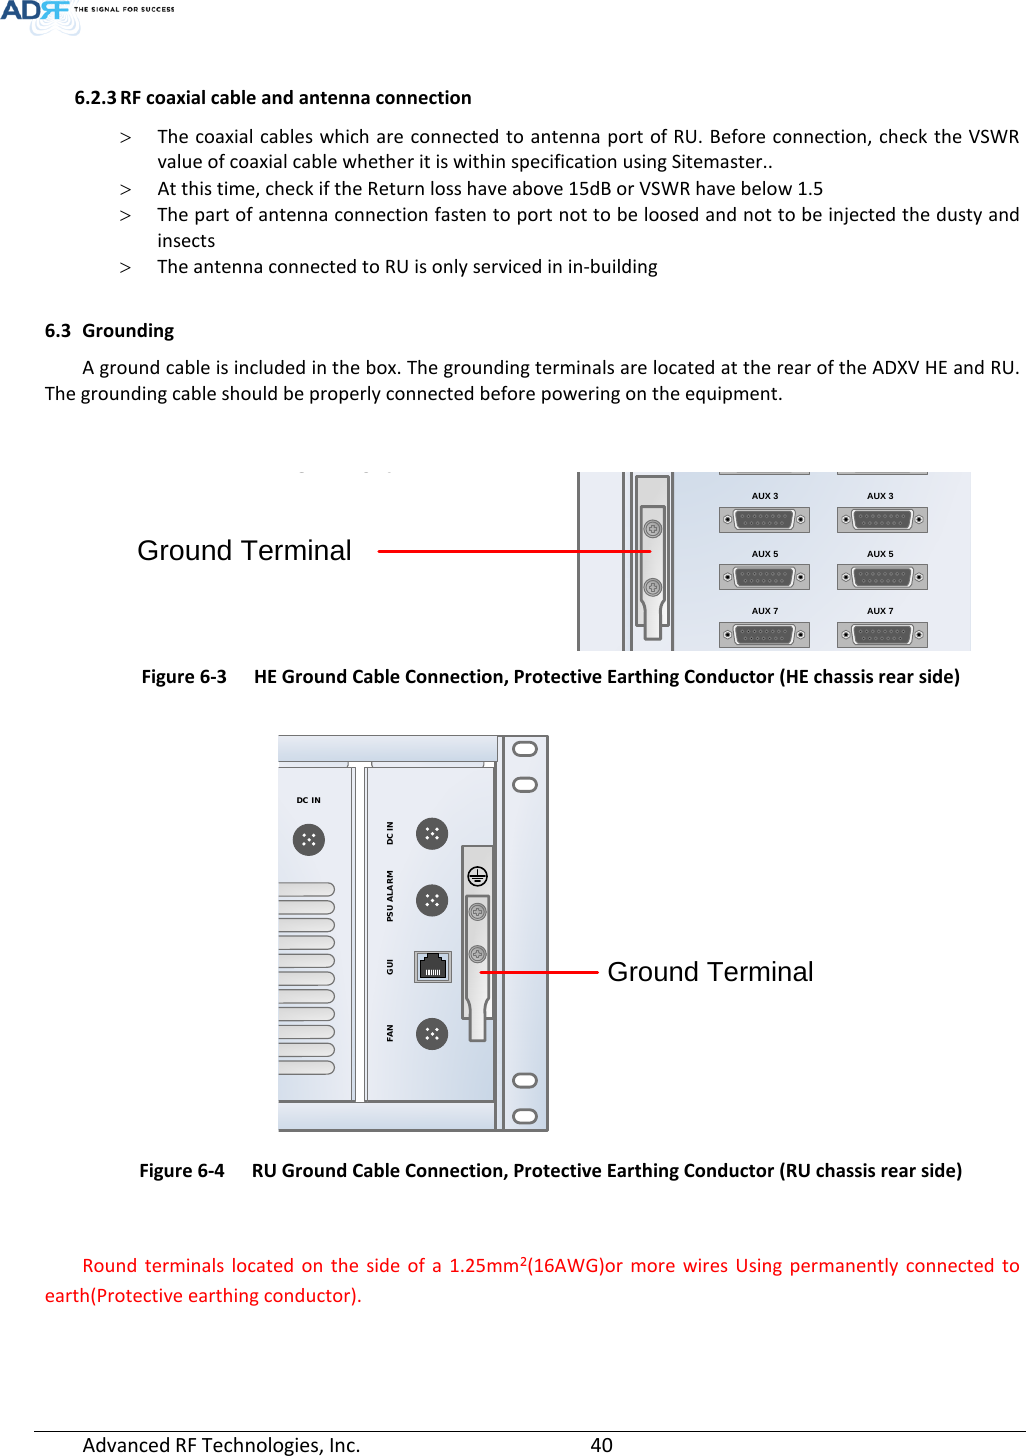 Page 40 of ADRF KOREA ADXV DAS(Distributed Antenna System) User Manual ADXV DAS